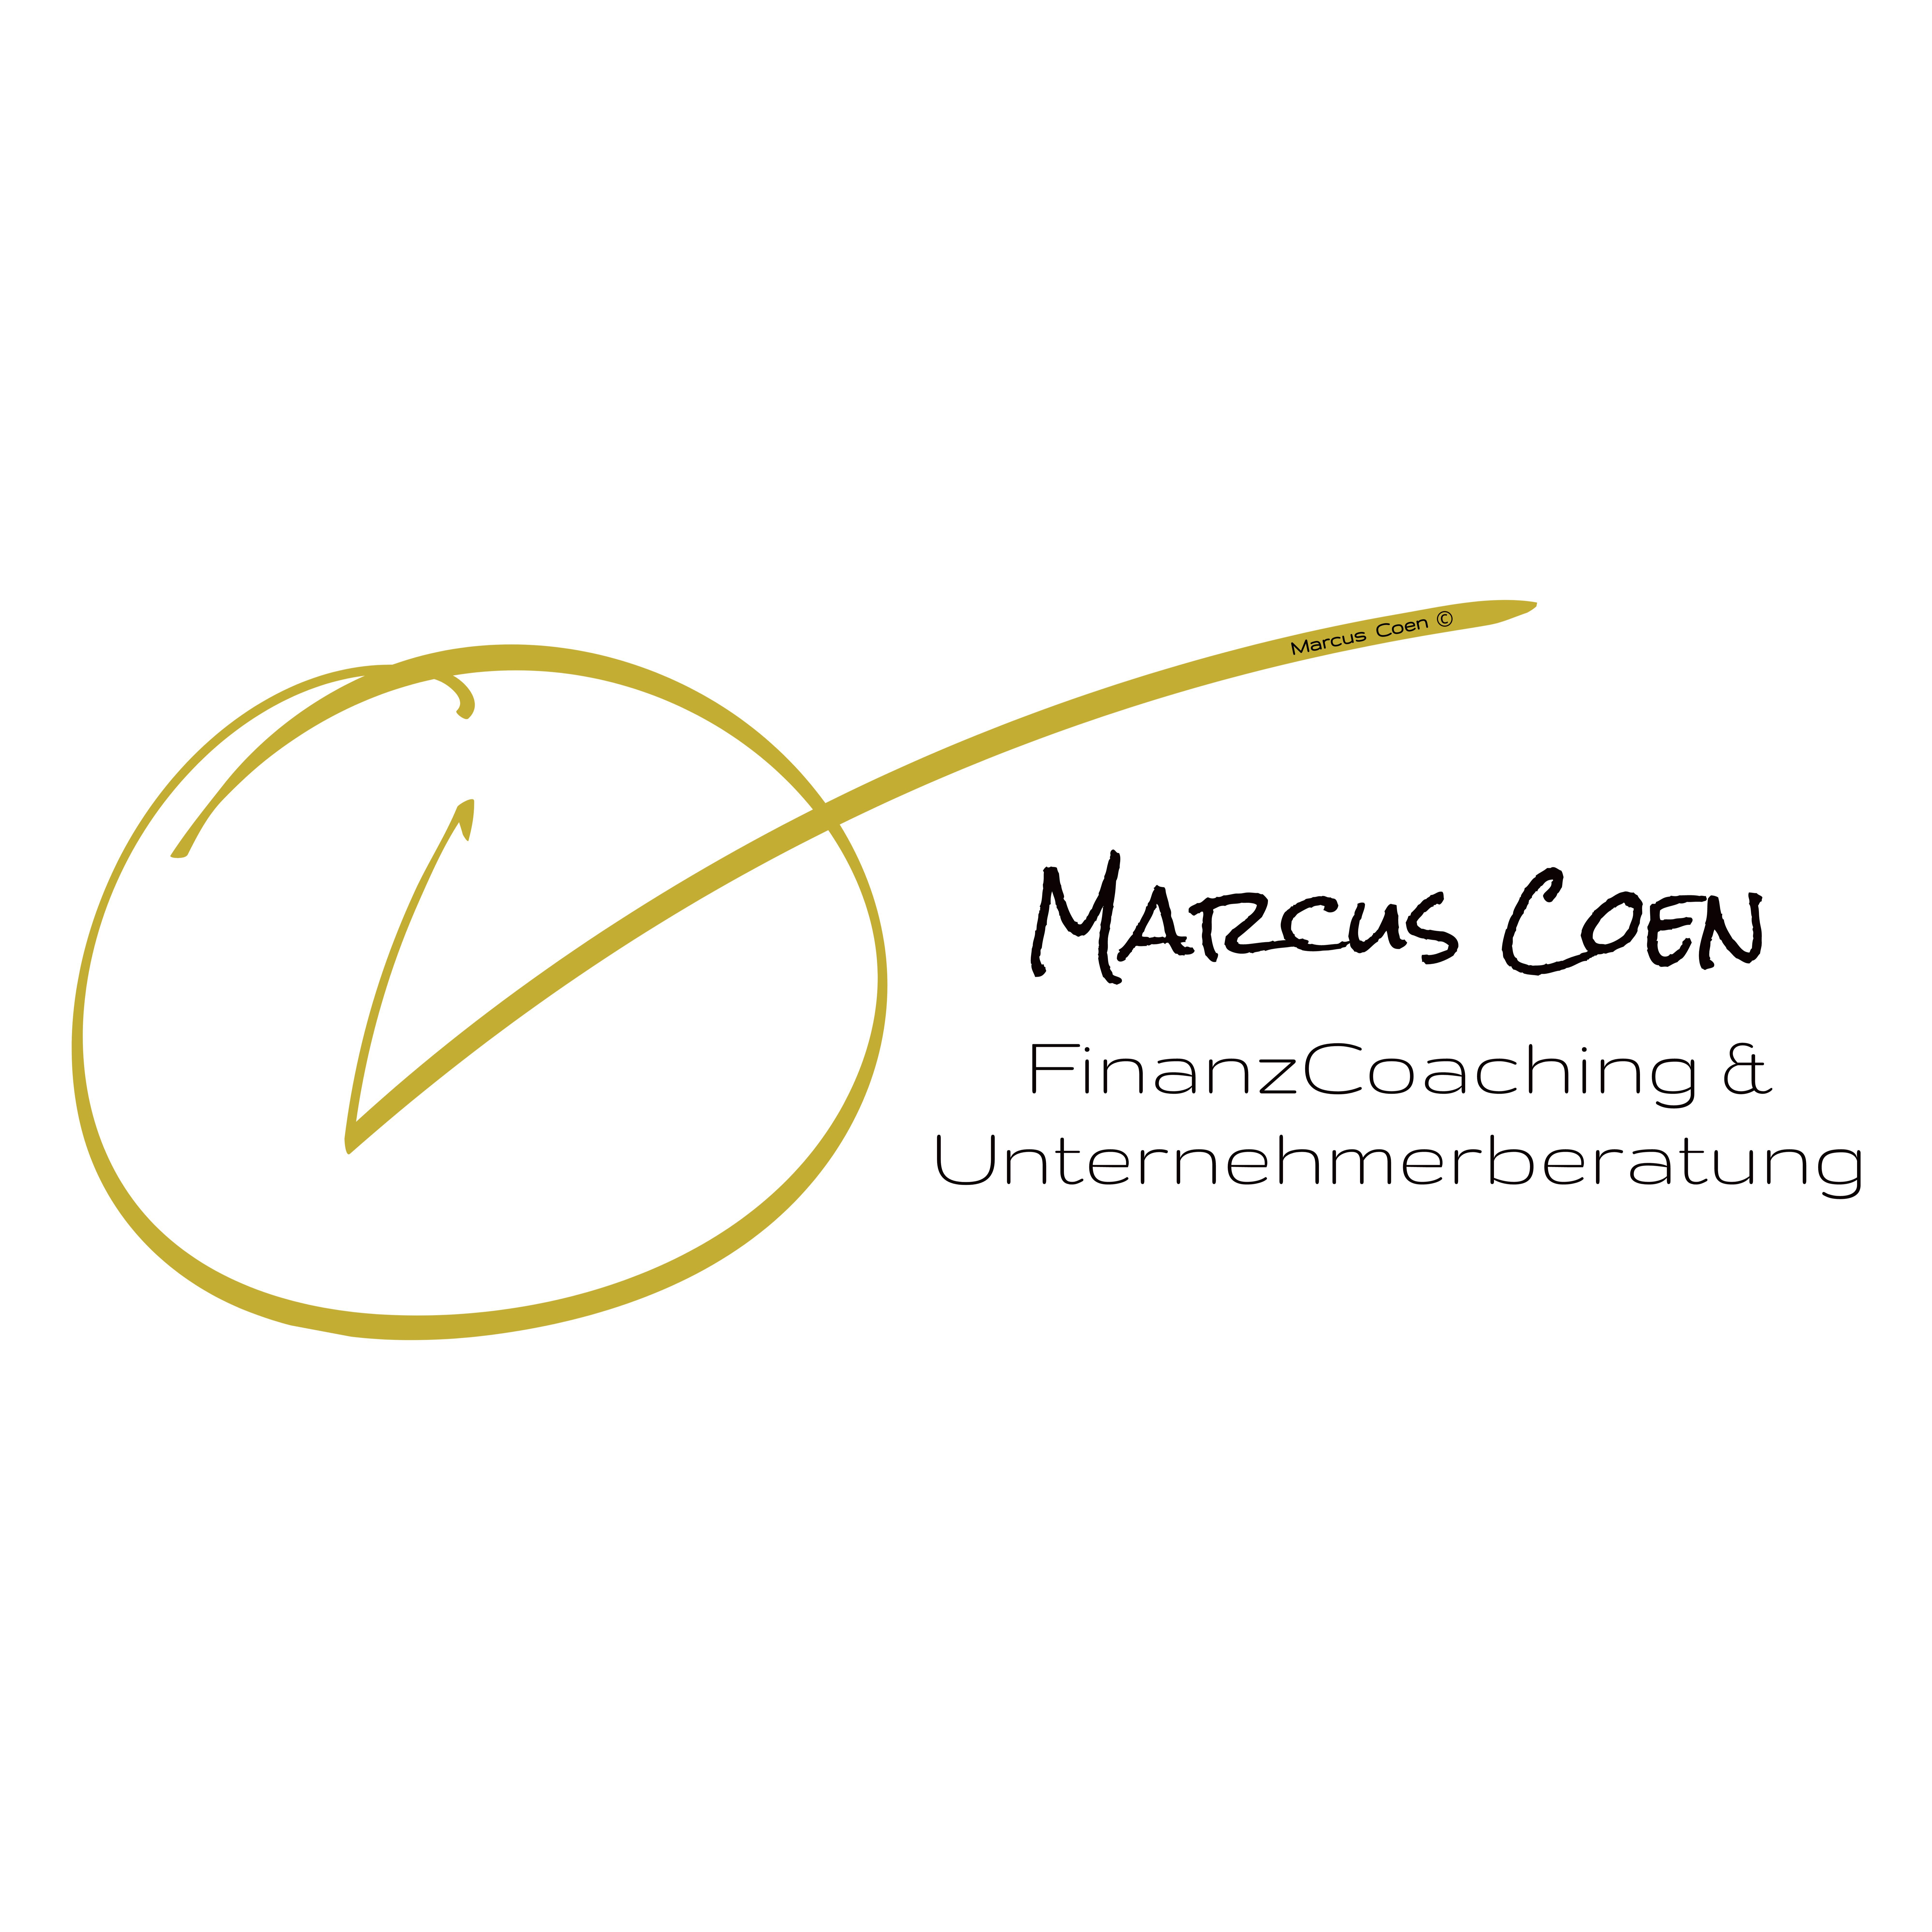 FinanzCoaching & Unternehmerberatung Marcus Coen in Wermelskirchen und Umgebung in Wermelskirchen - Logo